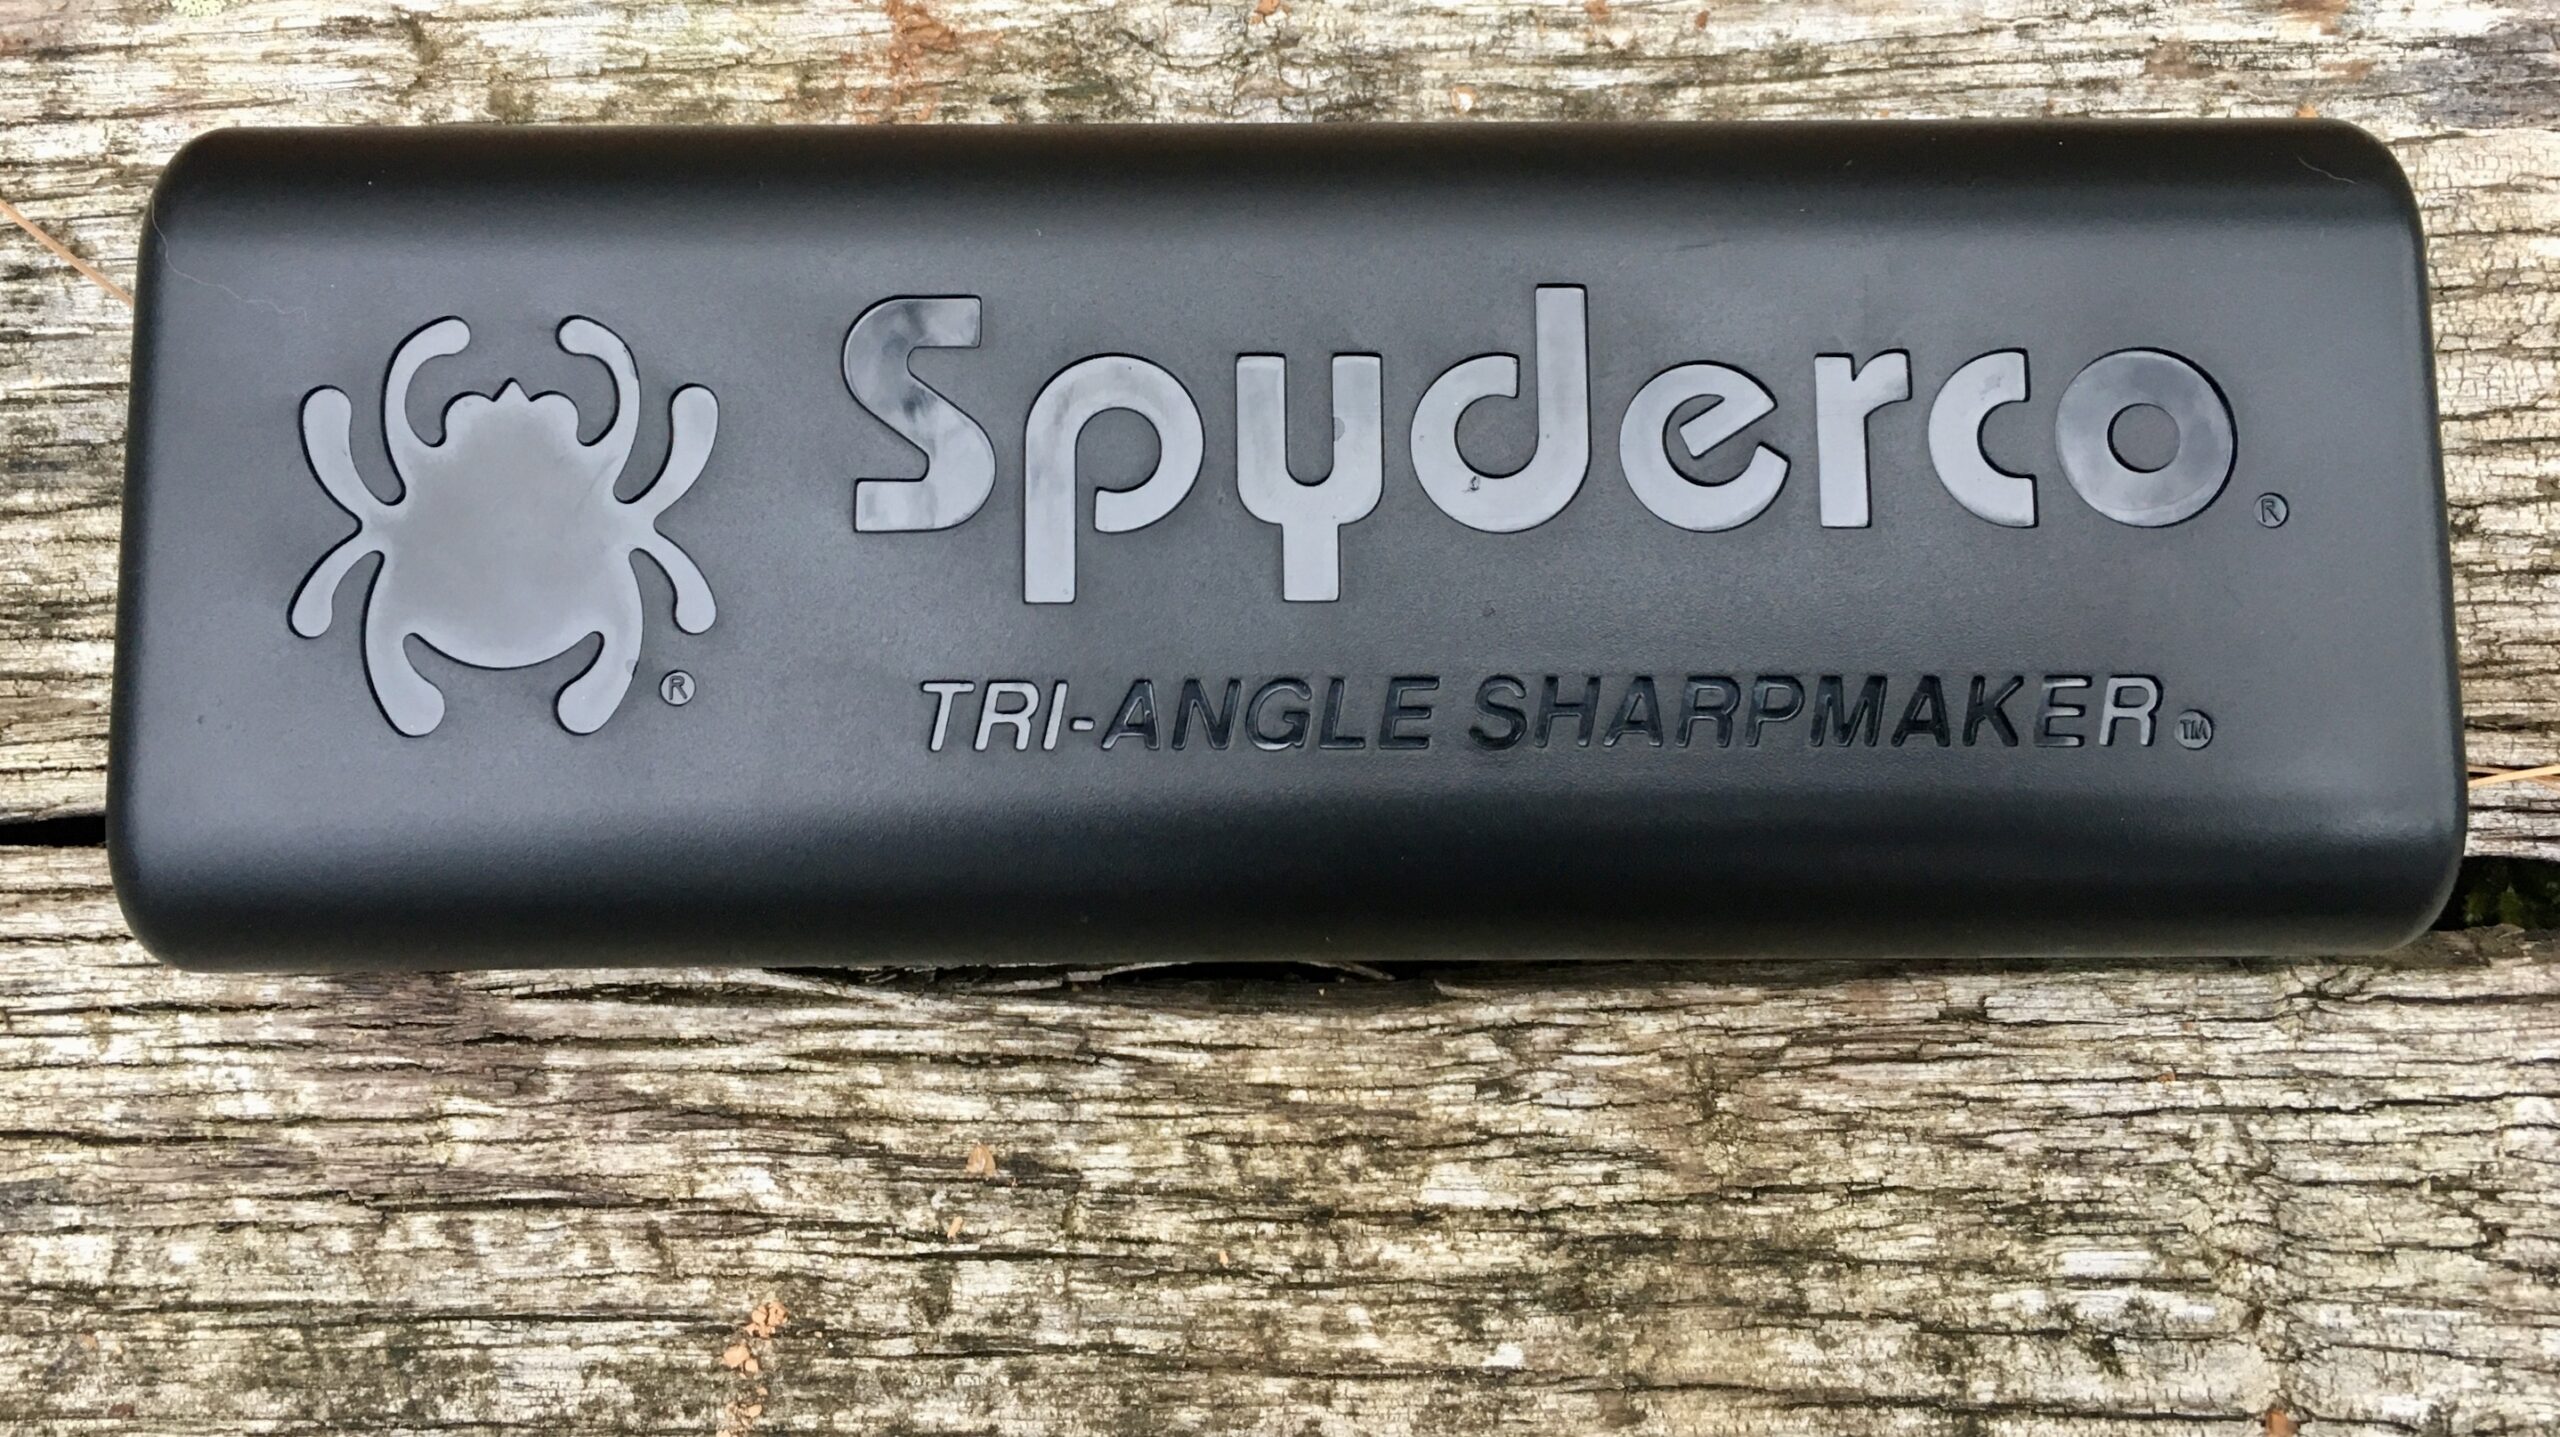 The Spyderco Sharpmaker - Swift, Silent